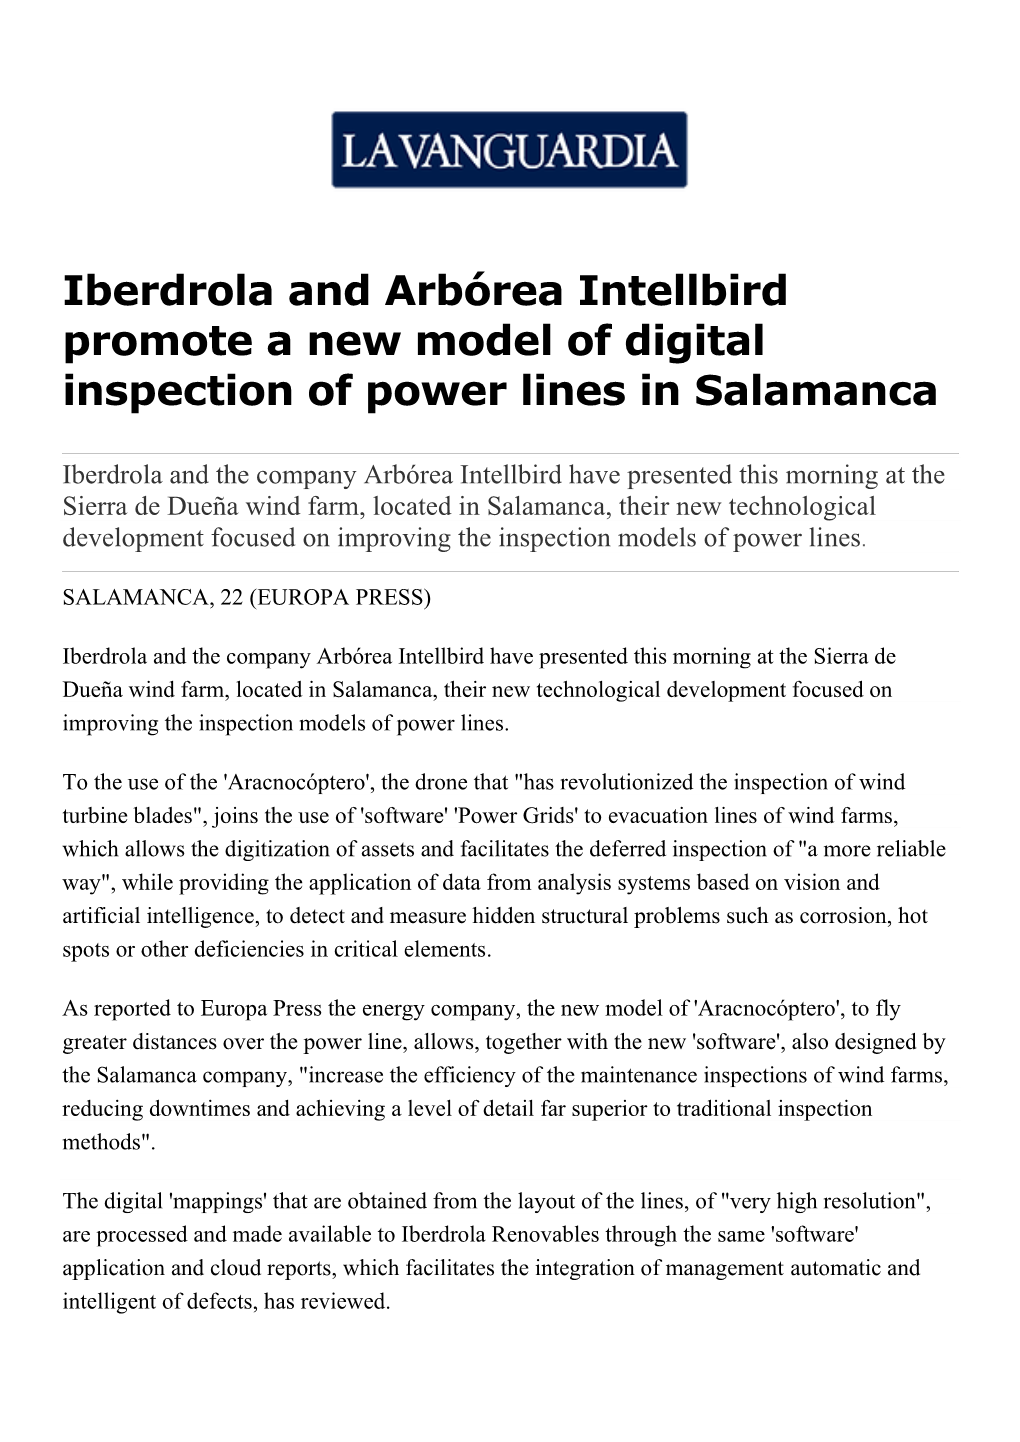 Iberdrola and Arbórea Intellbird Promote a New Model of Digital Inspection of Power Lines in Salamanca